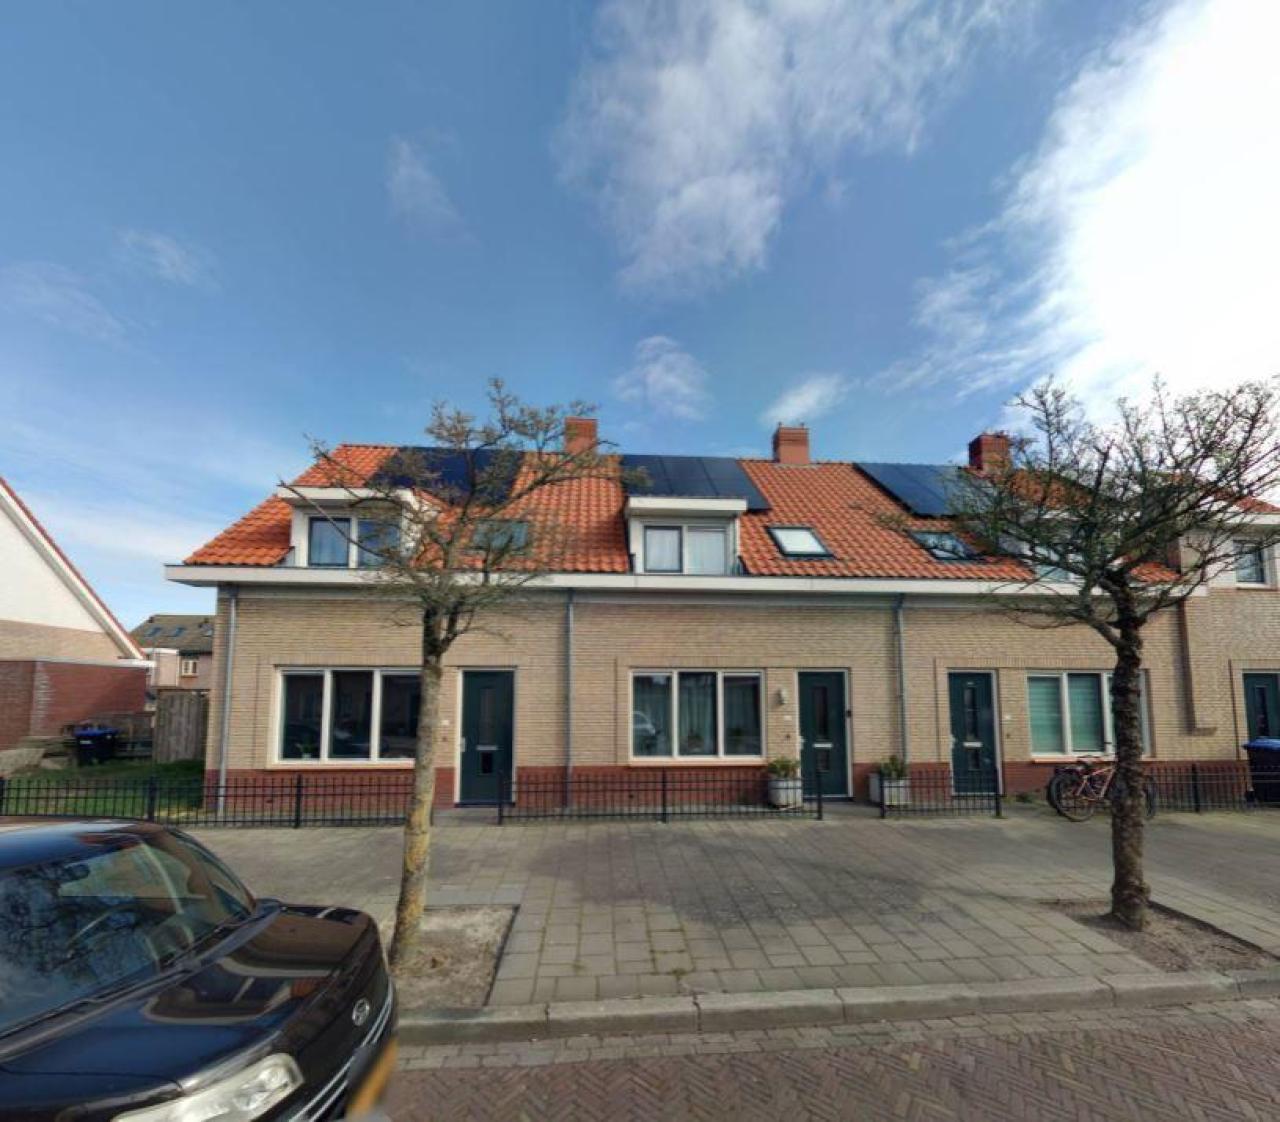 Tuinstraat 41, 1782 LJ Den Helder, Nederland